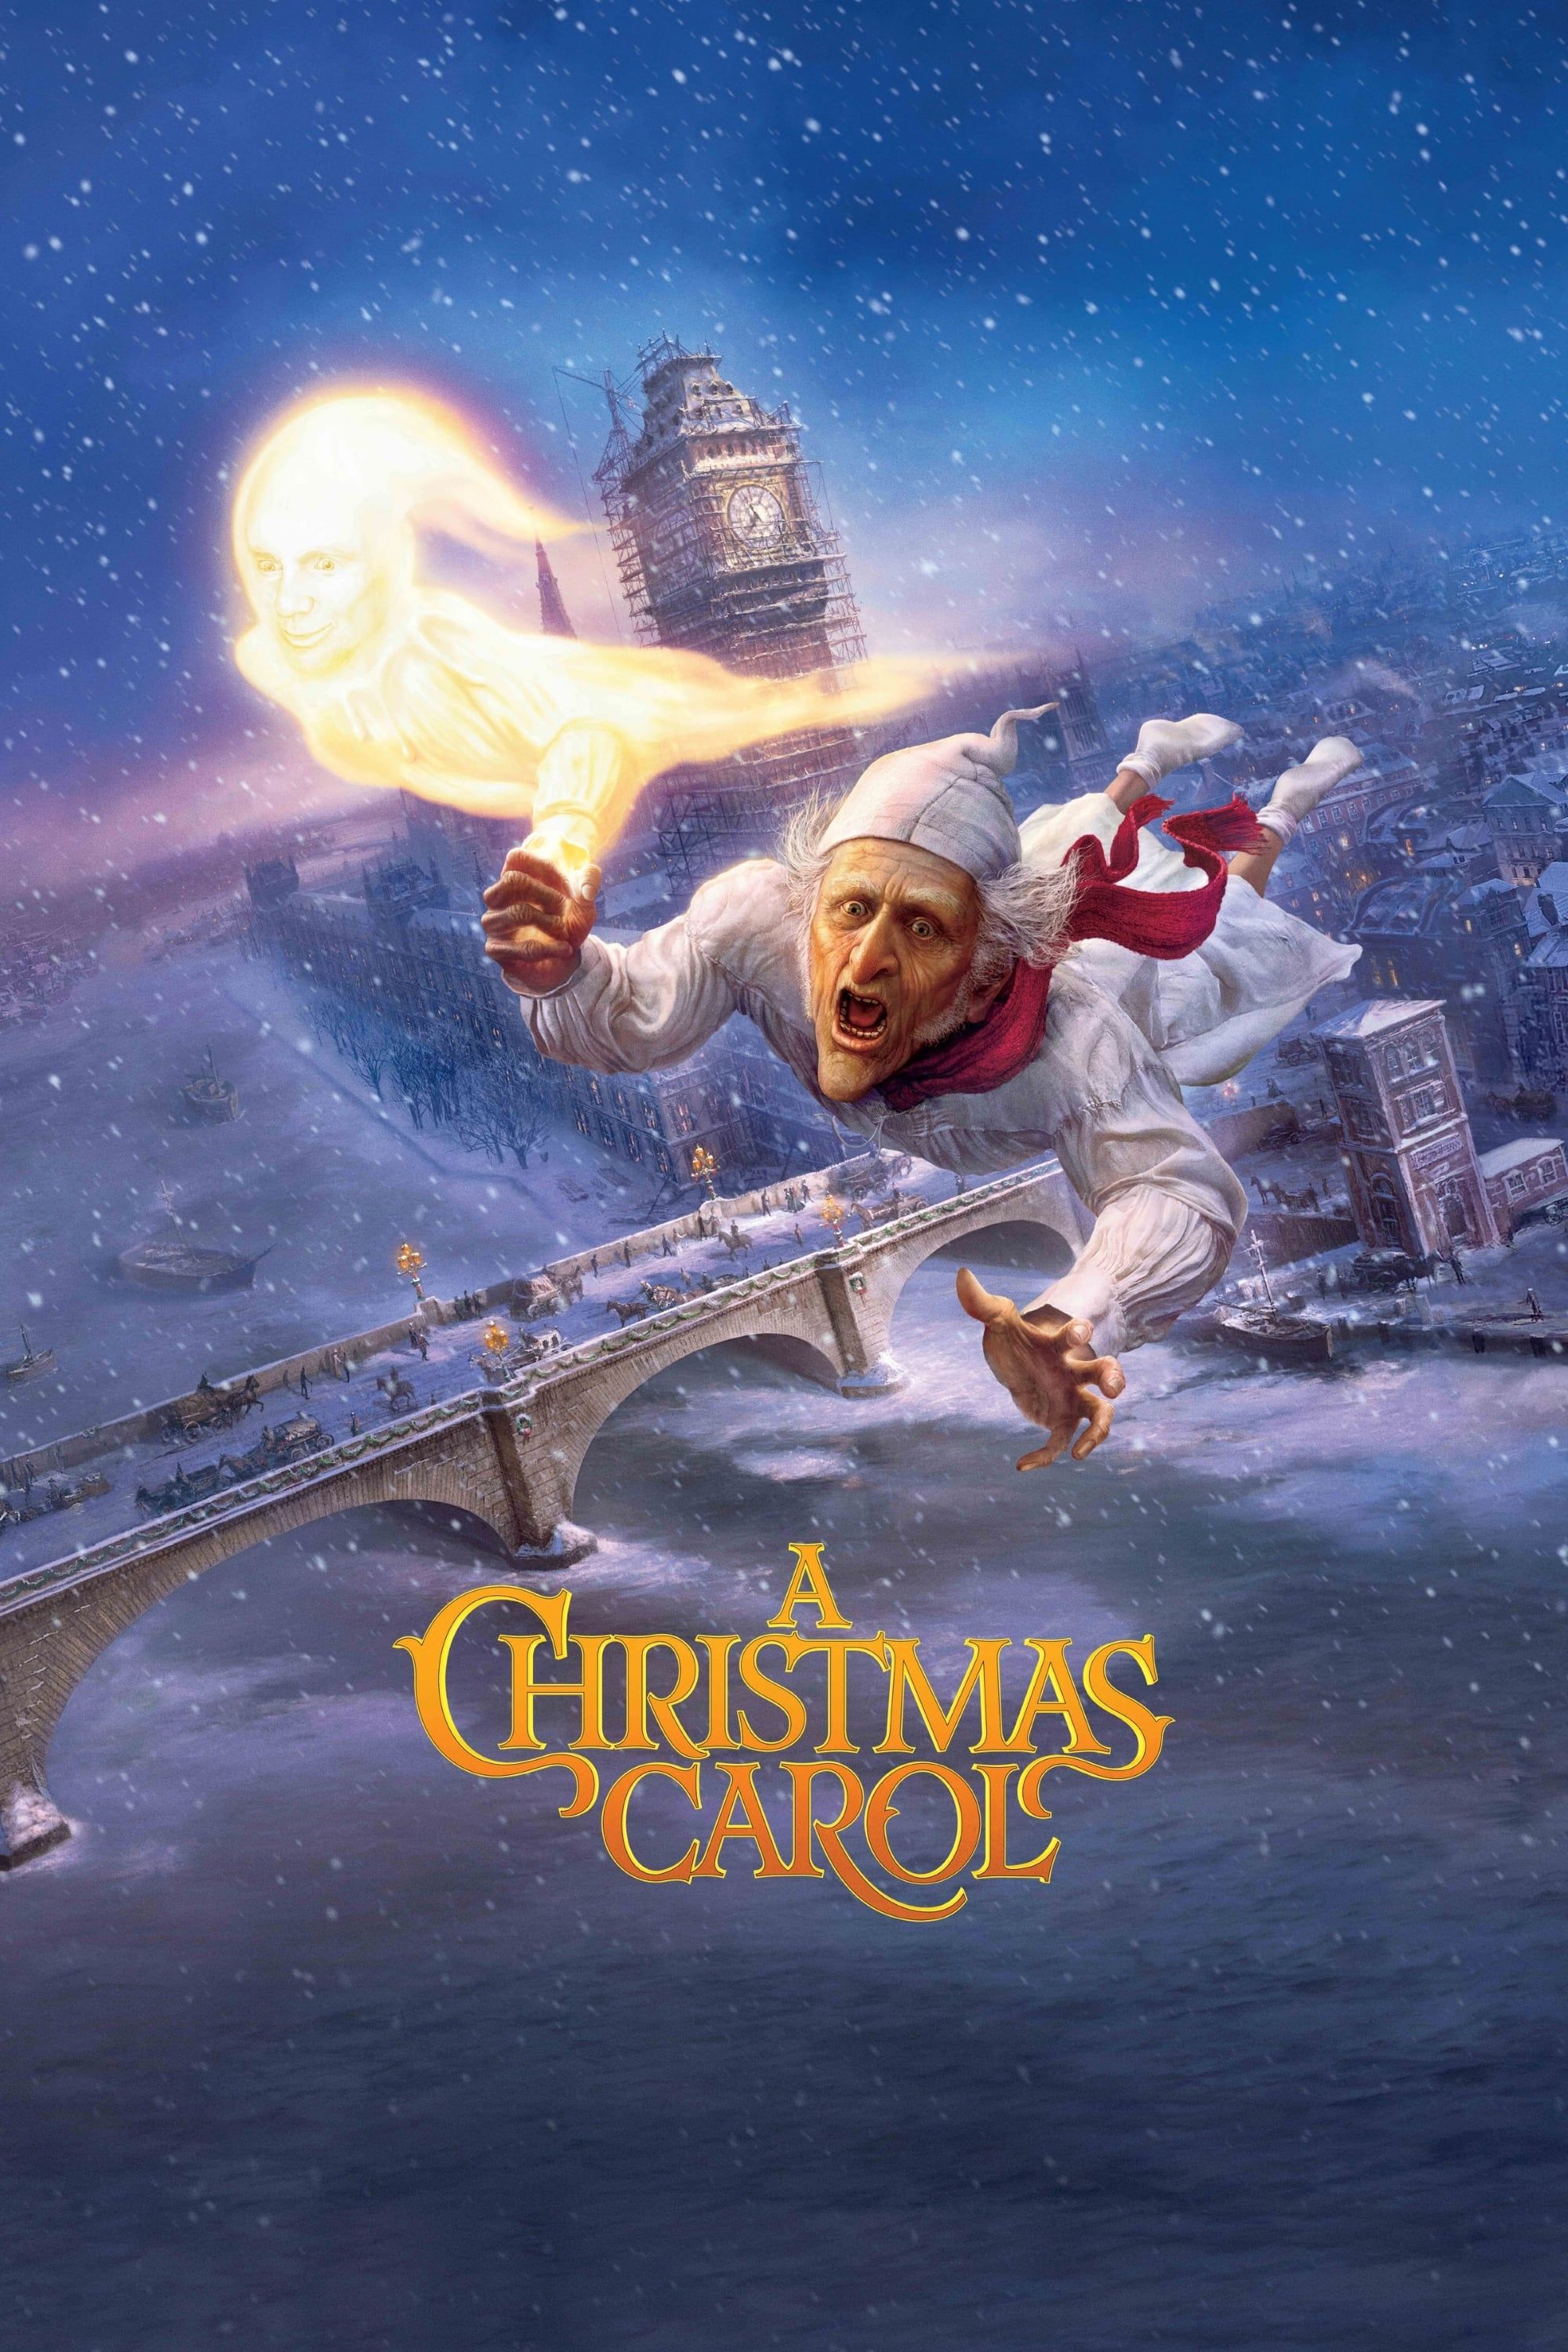 A Christmas Carol: The Top 10 Performances of Ebenezer Scrooge